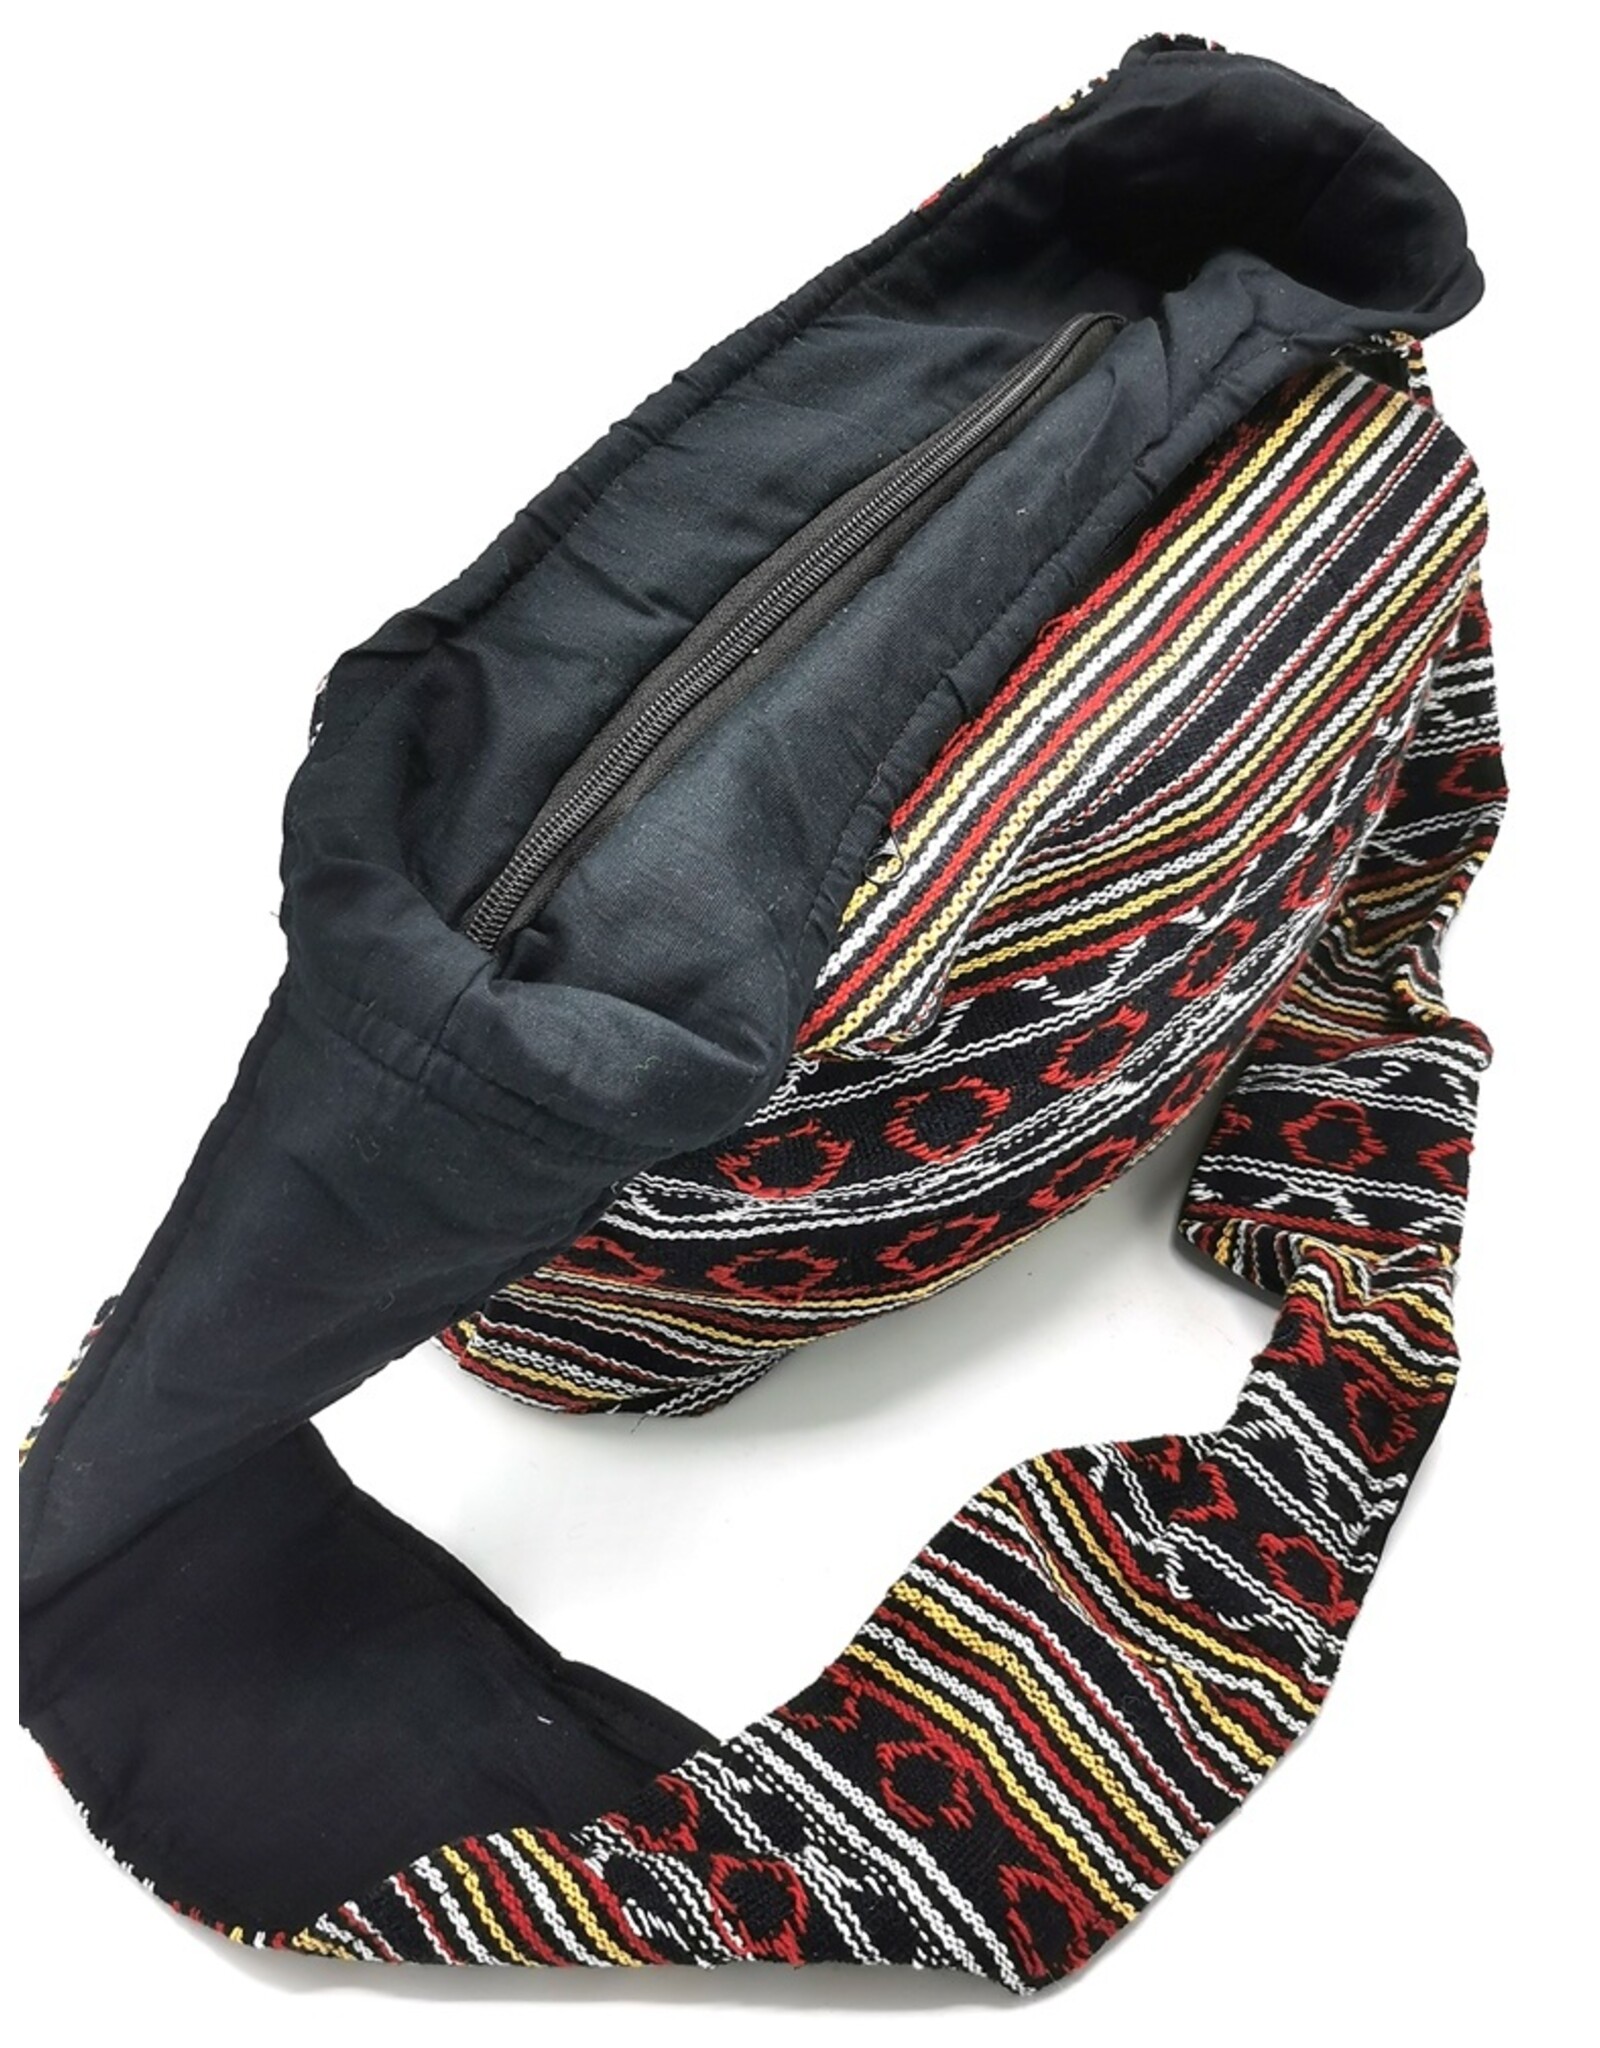 Trukado Fashion bags - Hobo bag Woven Fabric with Ethnic Pattern